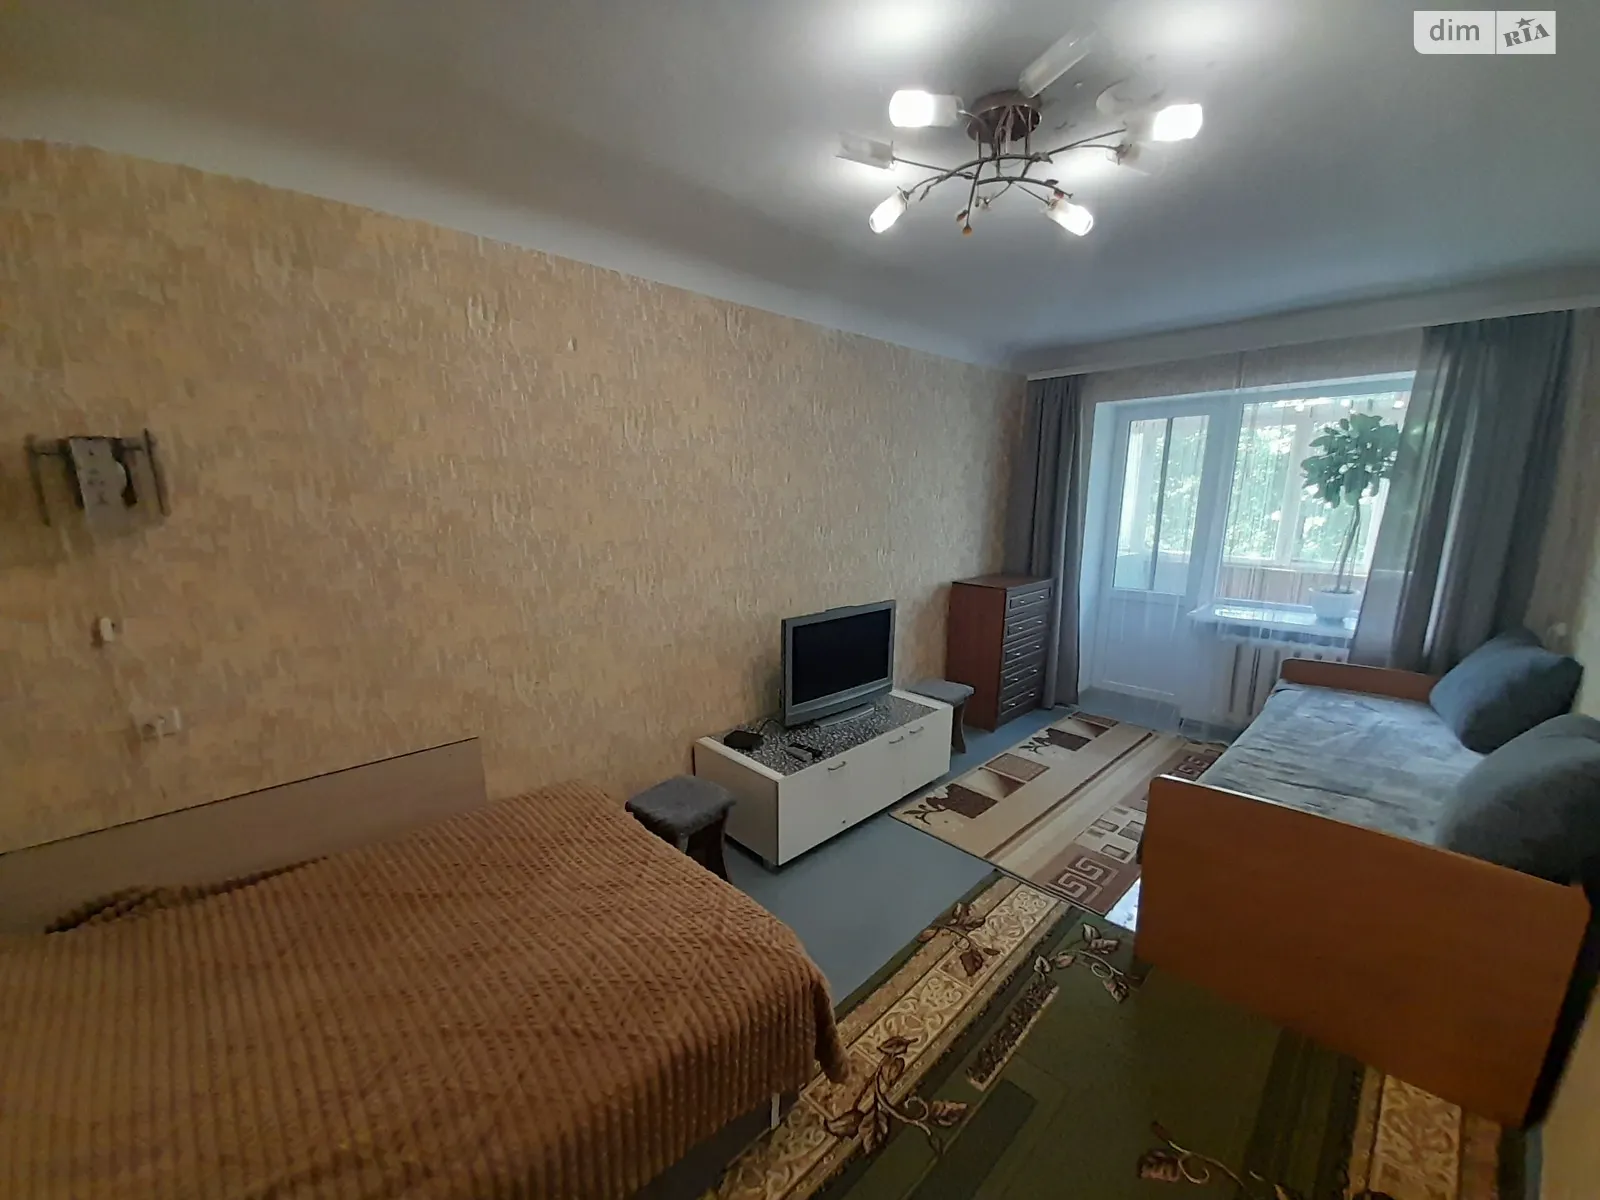 Сдается в аренду 1-комнатная квартира в Ровно, ул. Княгини Ольги, 13 - фото 1